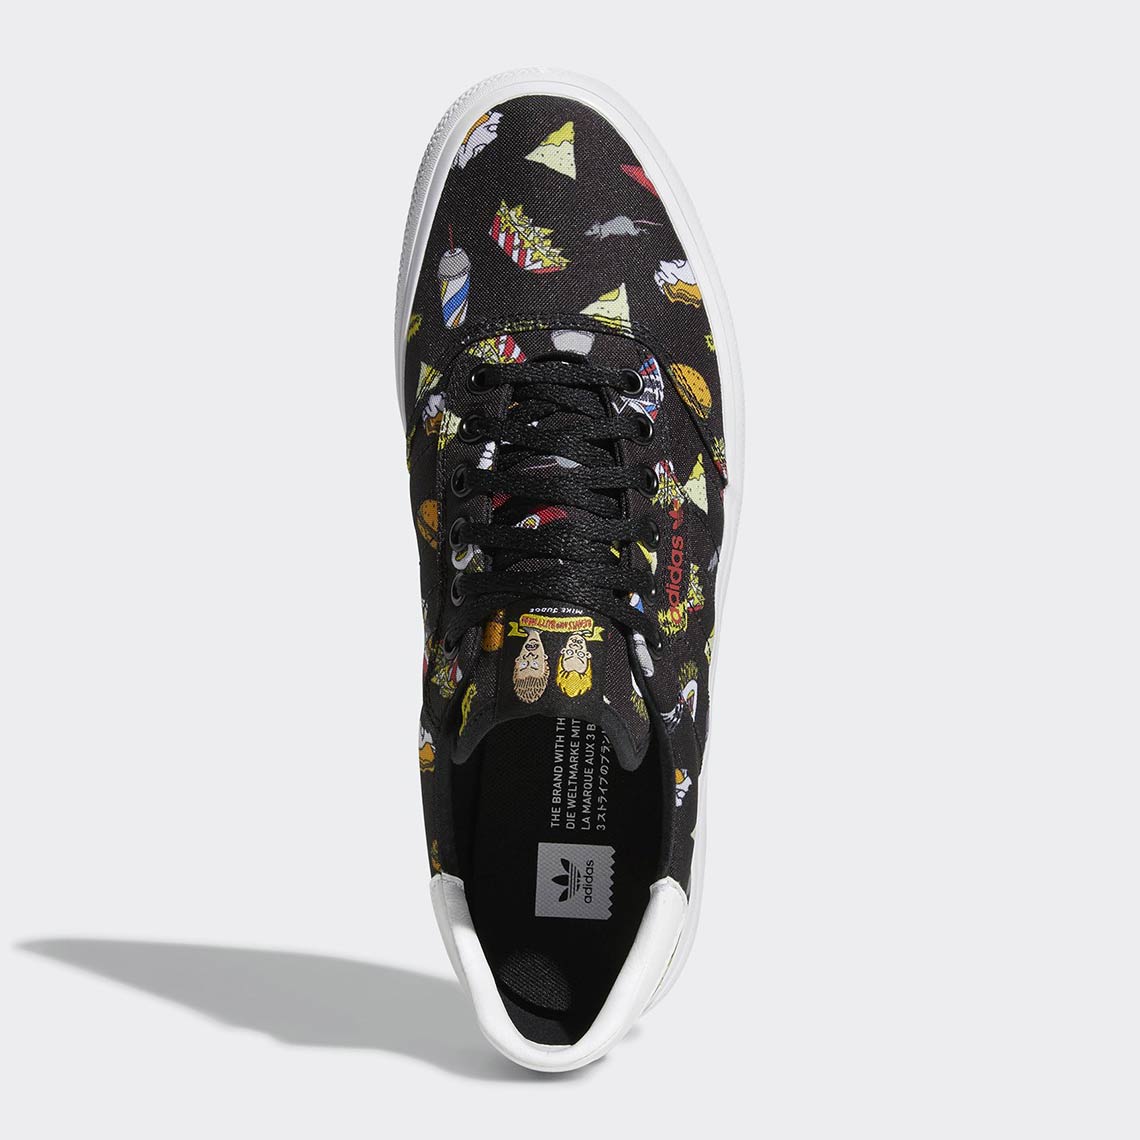 Beavis and Butt-Head adidas 3MC Shoes | SneakerNews.com